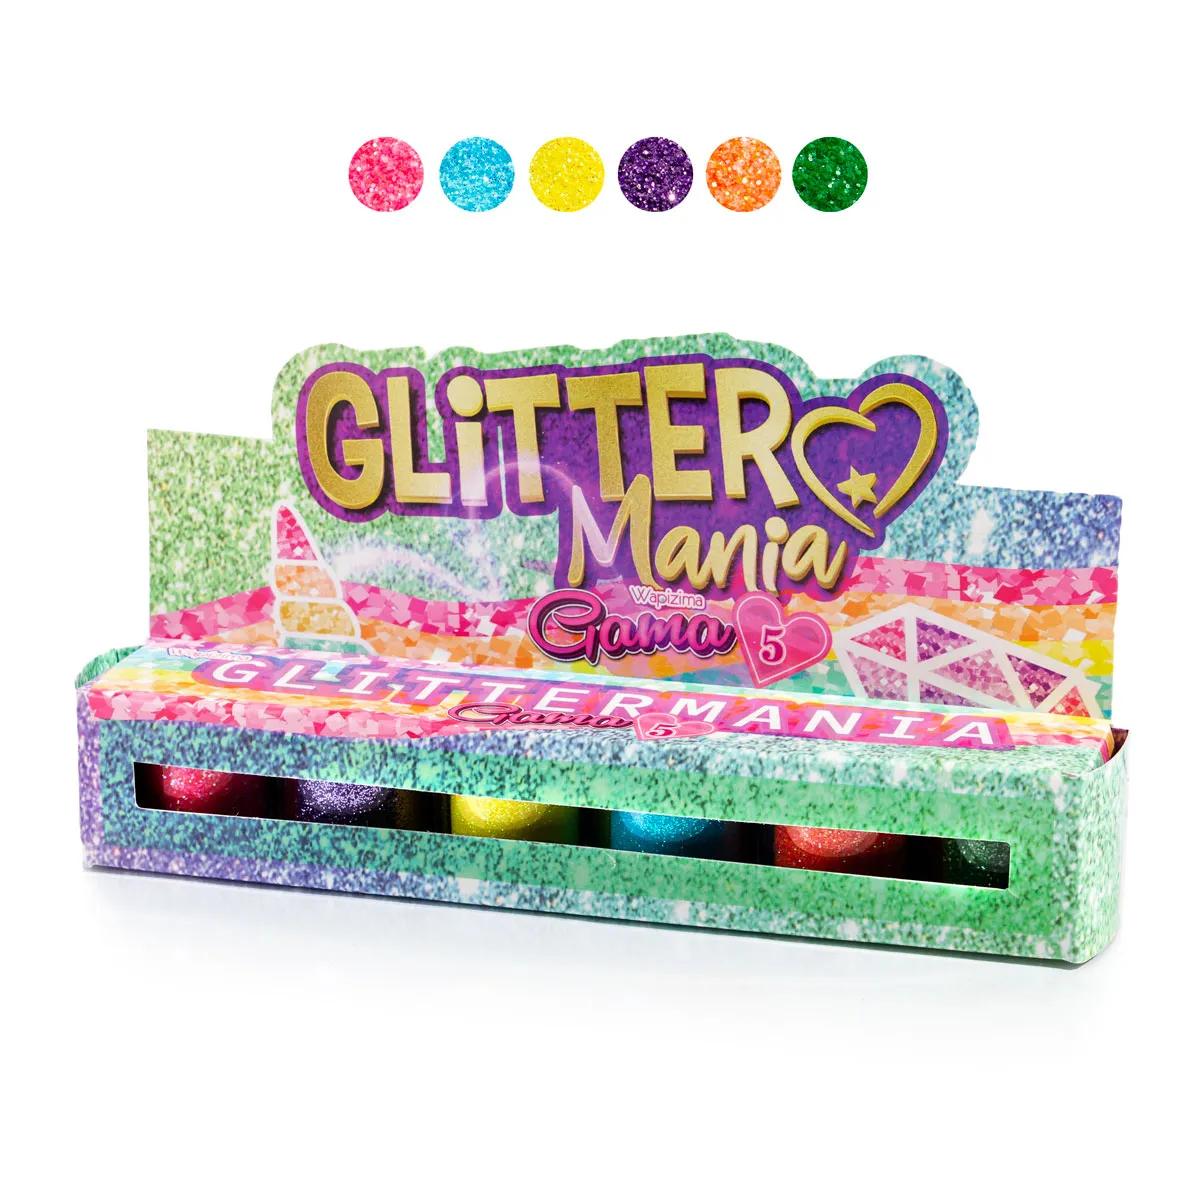 W: Glitter Mania Gama 5